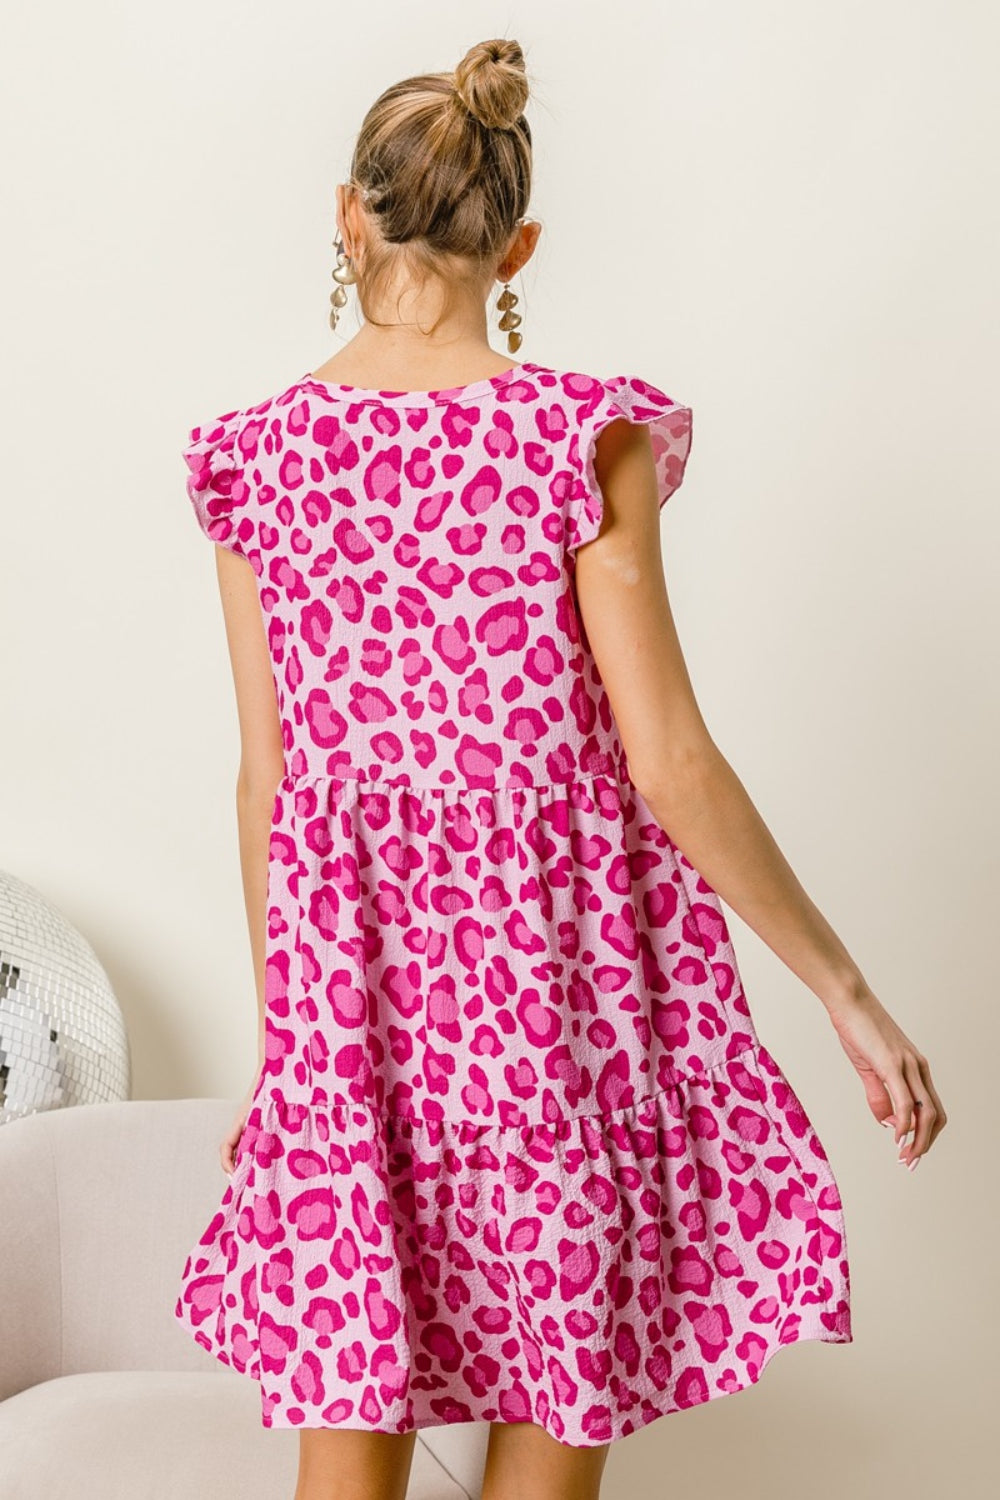 Leopard Love Tiered Mini Dress in Hot Pink